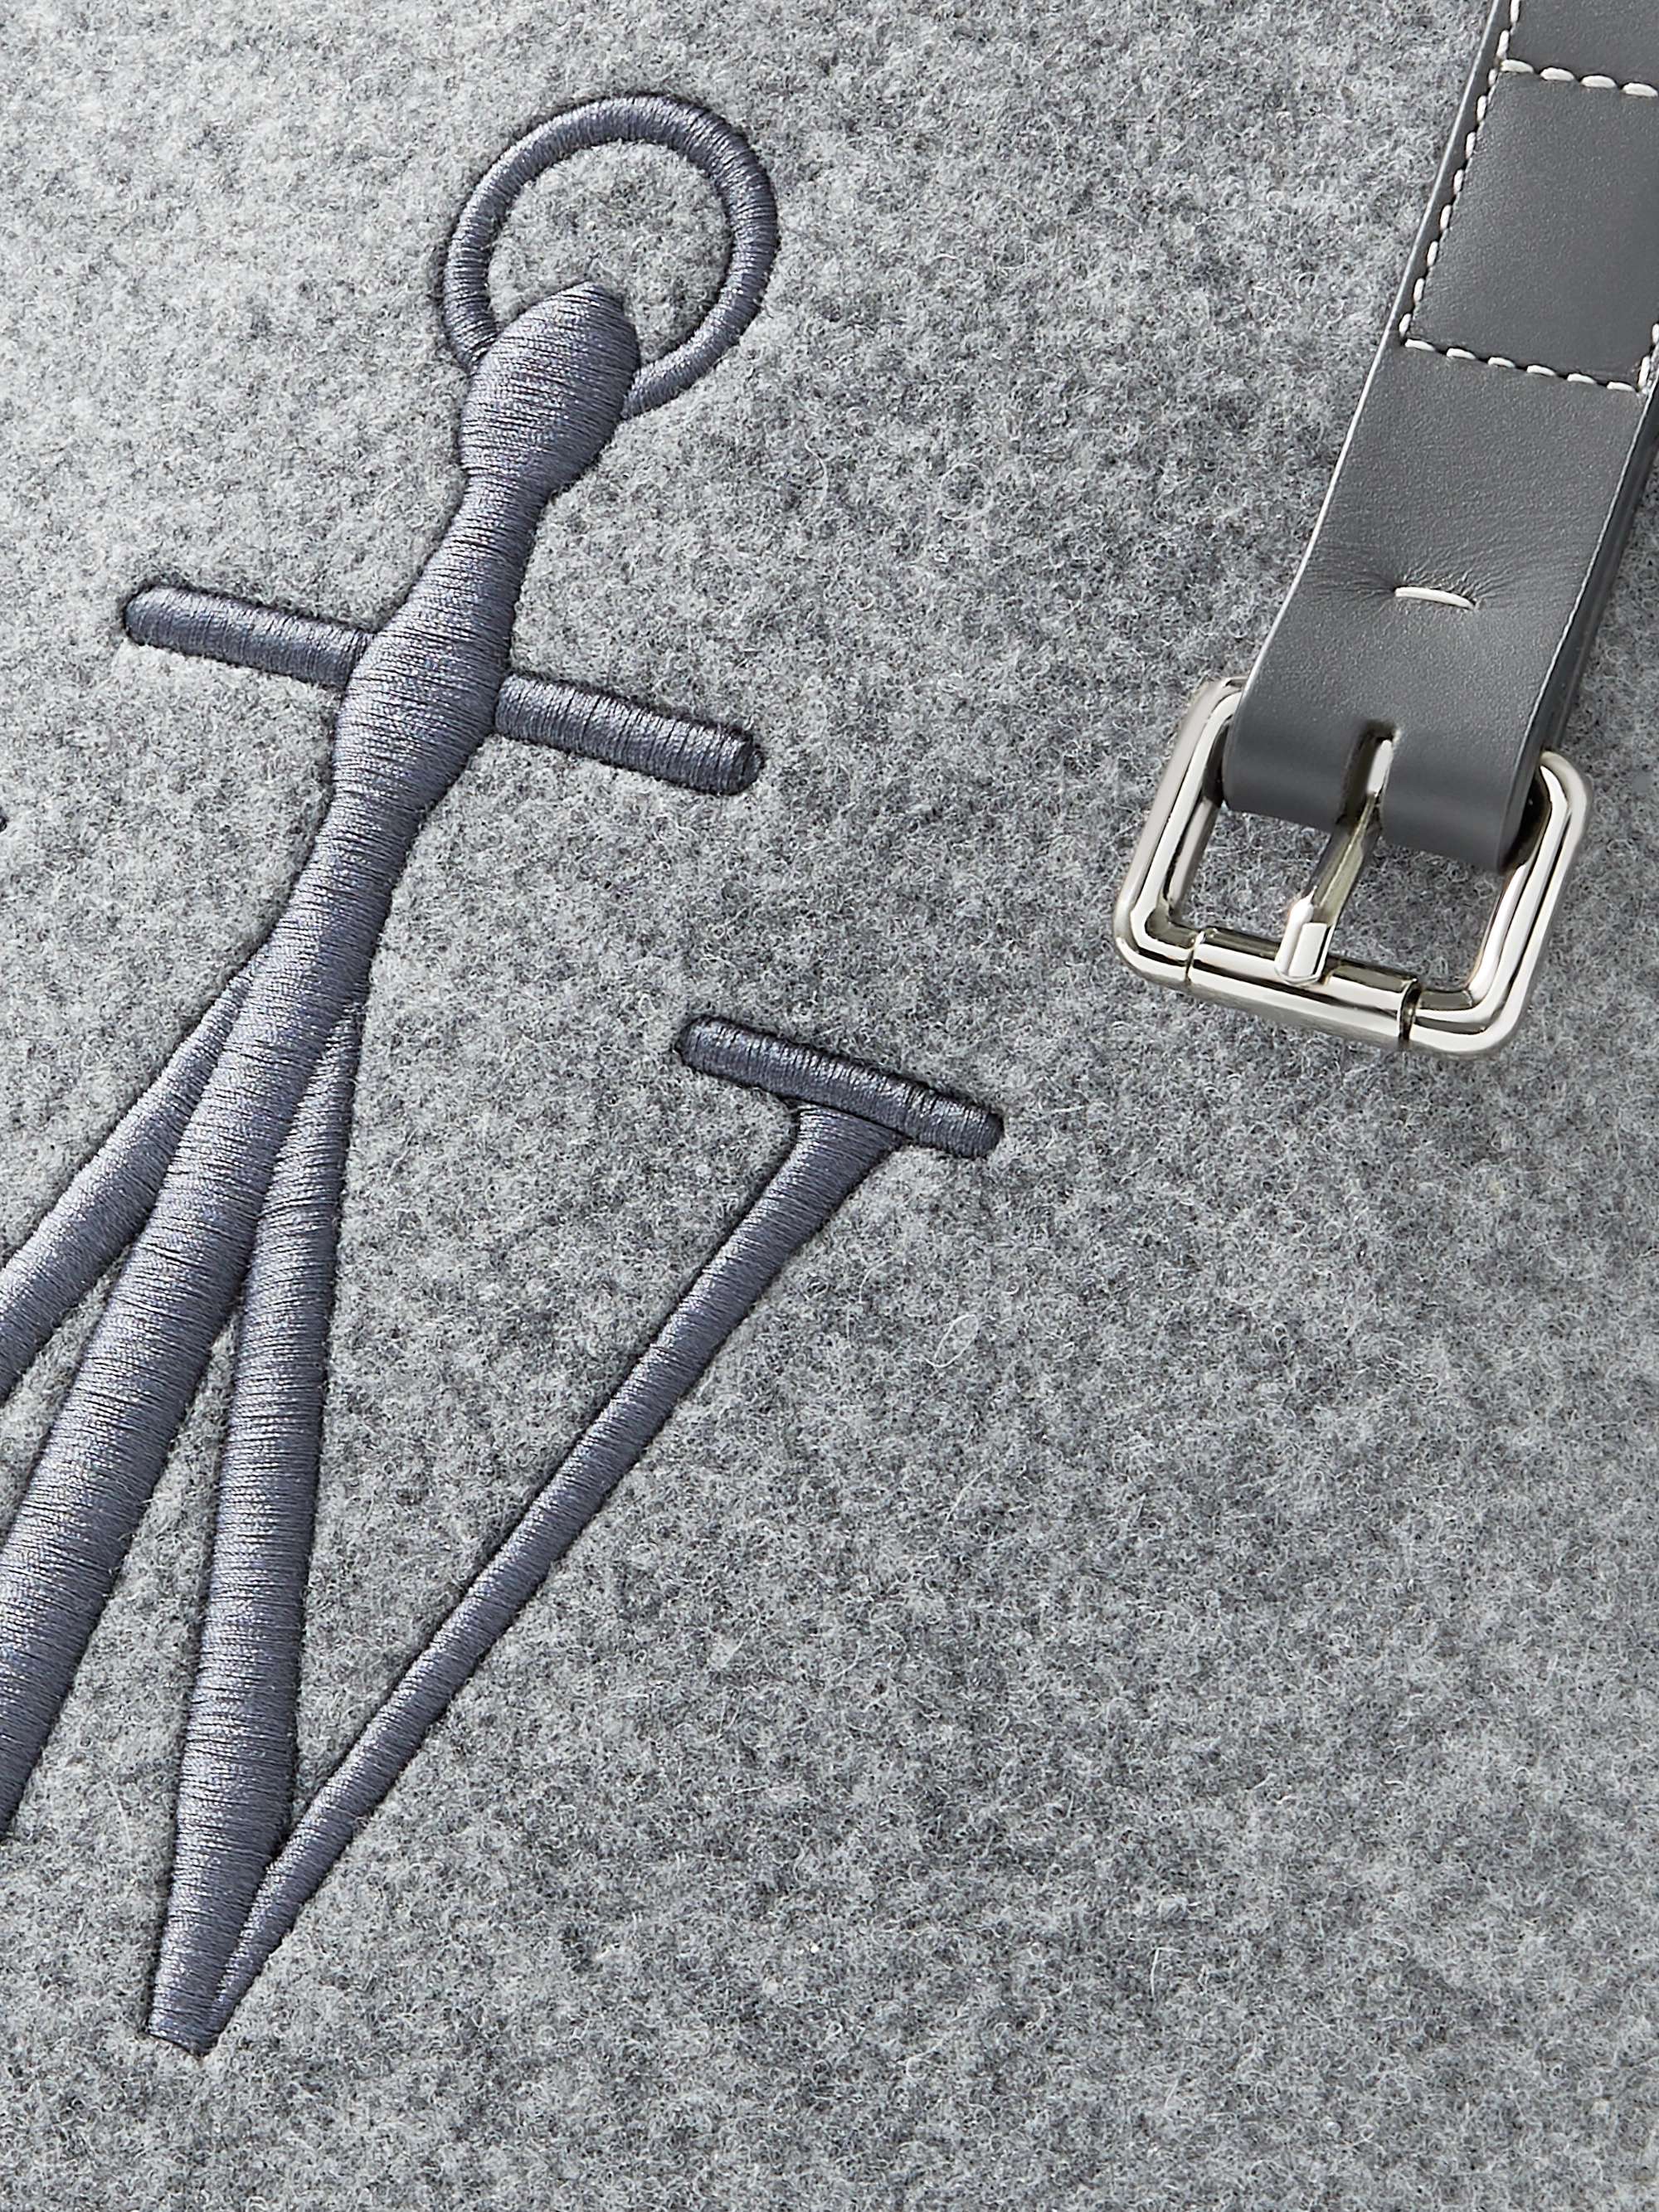 JW ANDERSON Logo-Embroidered Leather-Trimmed Felt Tote Bag